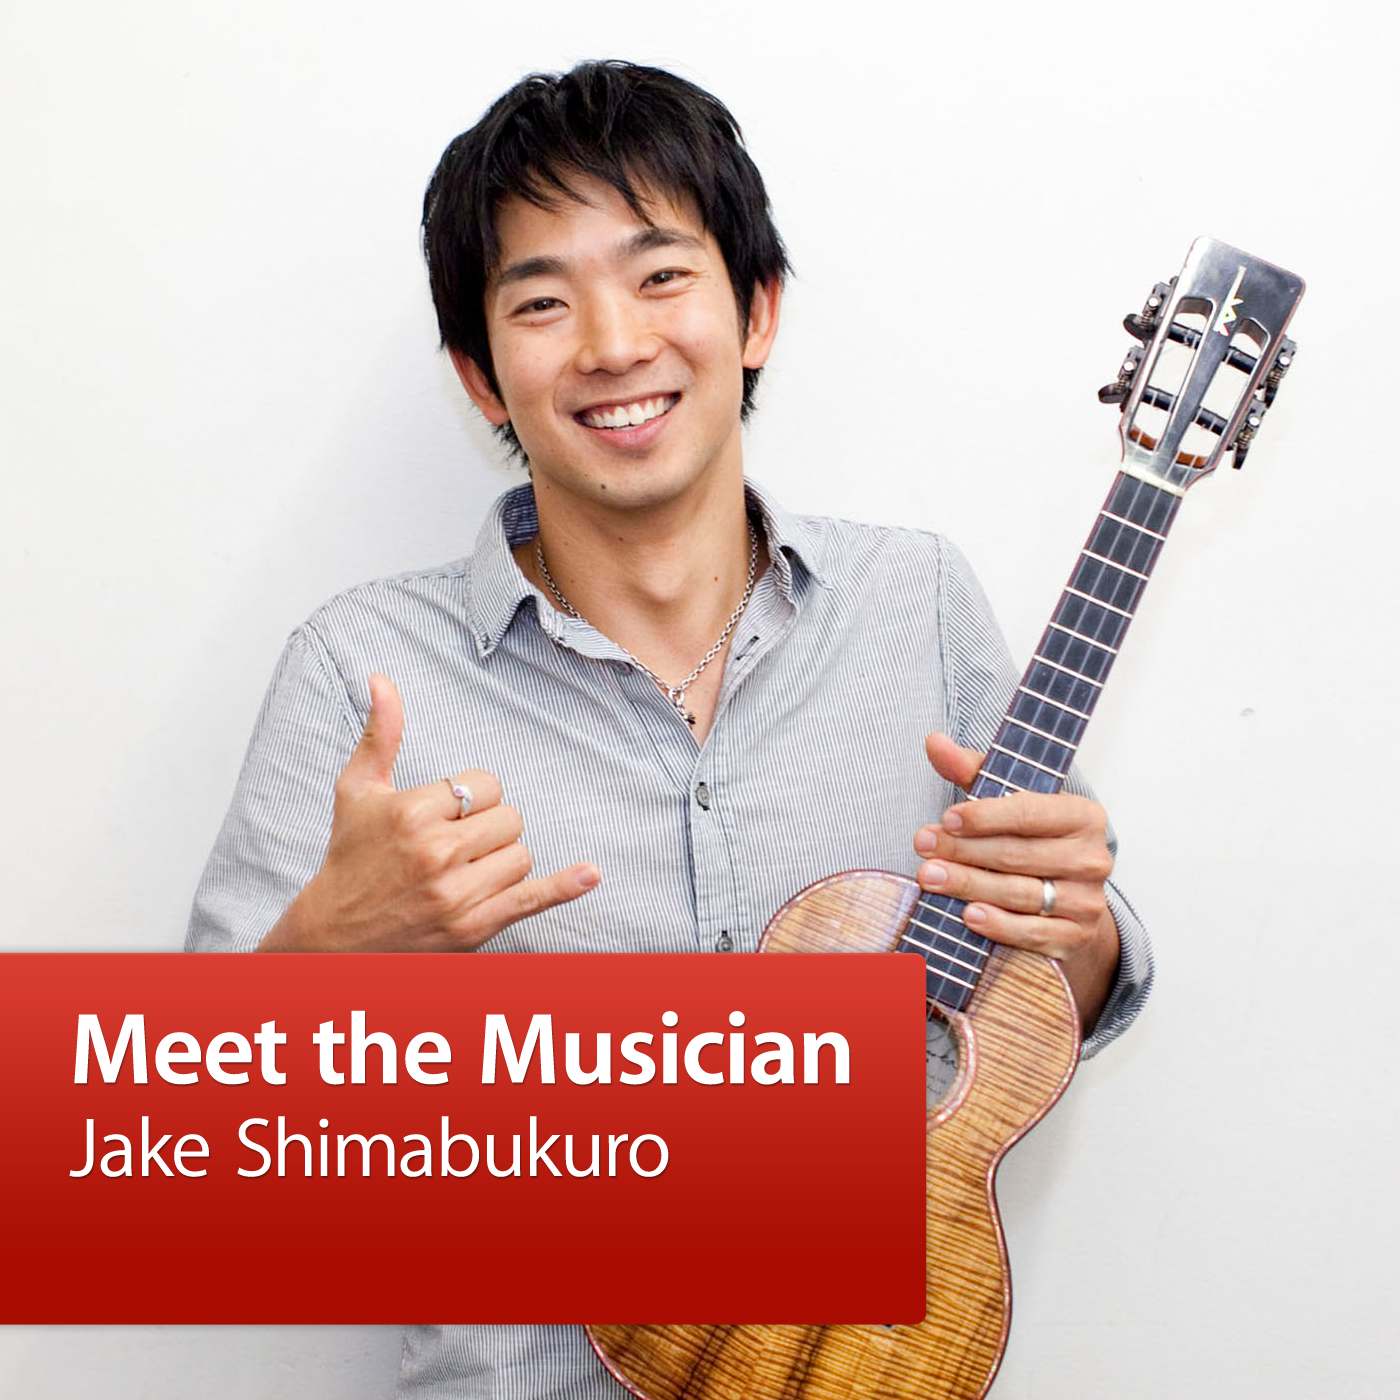 Jake Shimabukuro: Meet the Musician